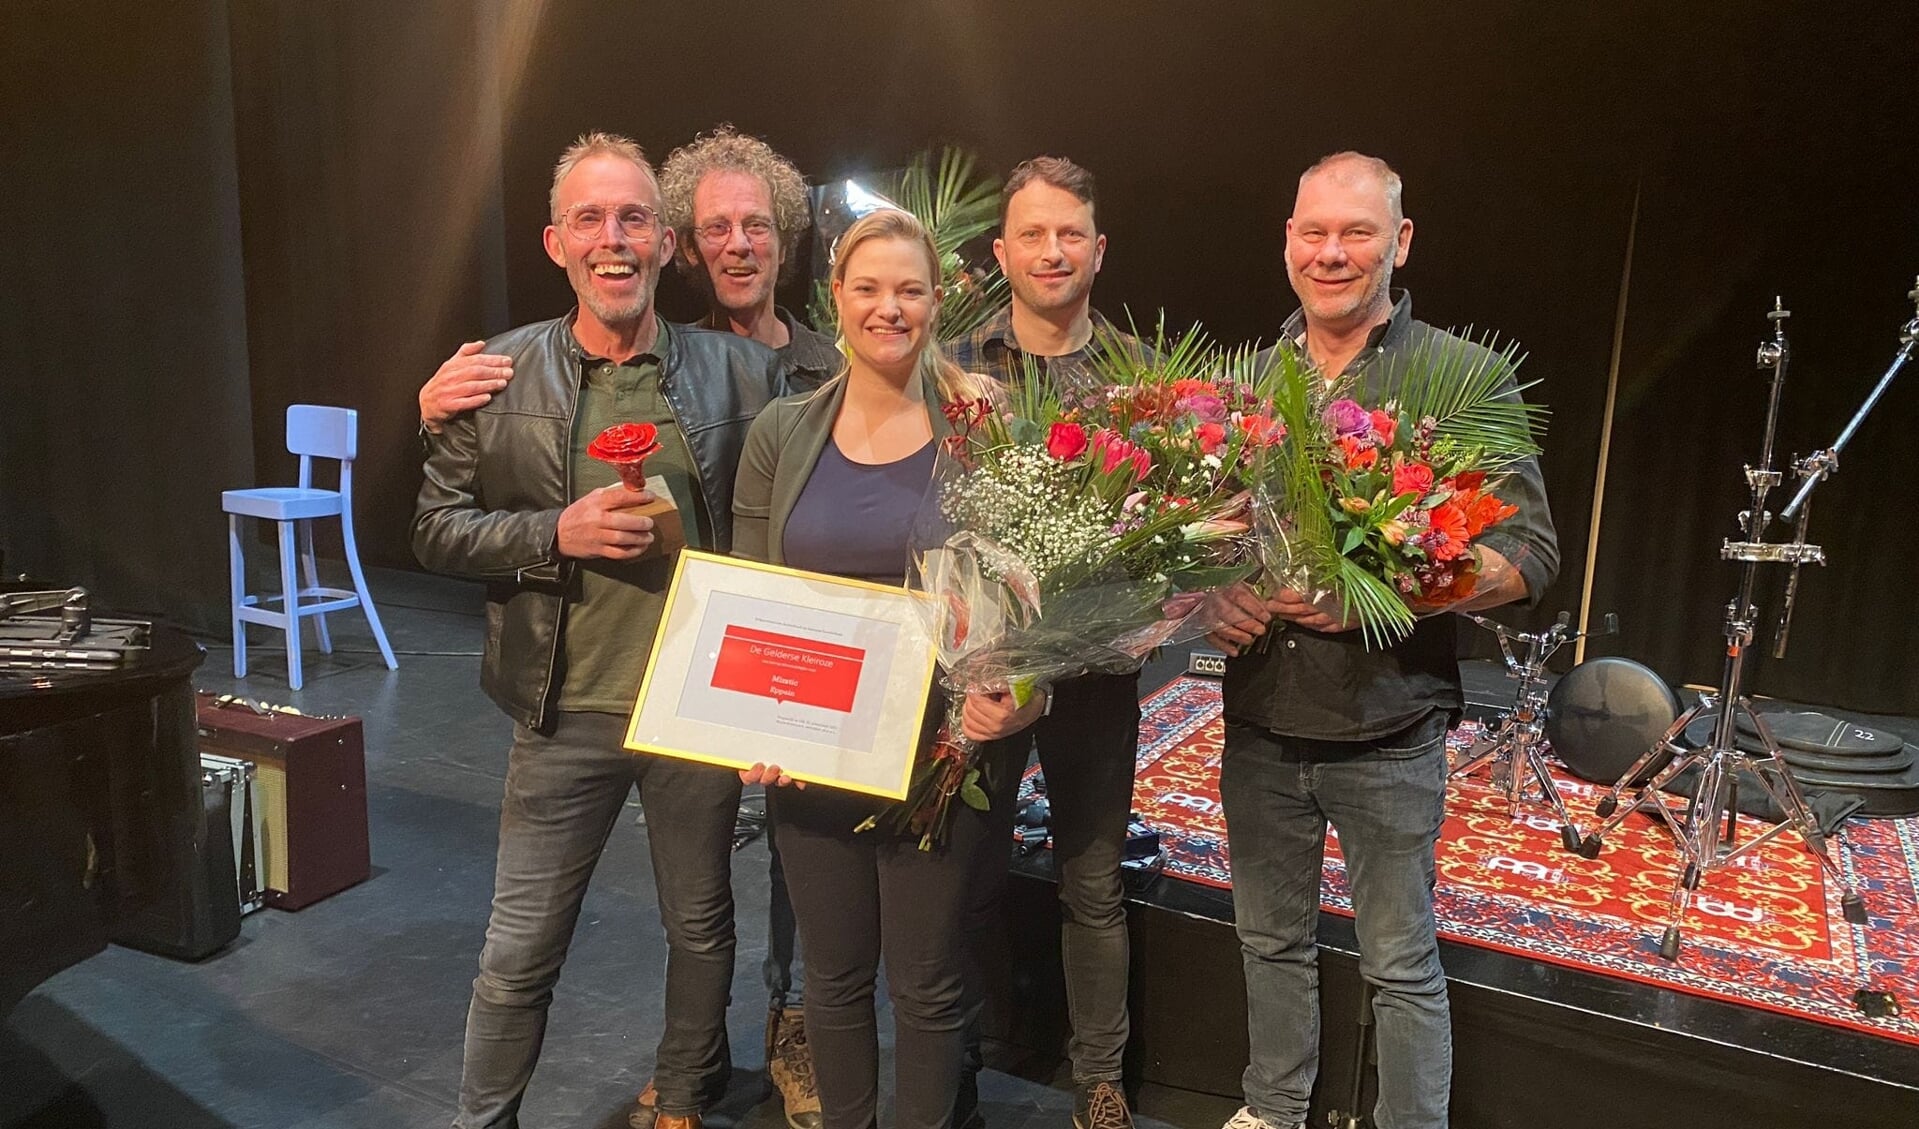 Winnaars van de Gelderse Kleiroze: Duo Misztic. Vlnr: Eric Heutinck, Tom Holkenborg (gitaar), Sandra Vriese, Marnix Flikweert (basgitaar) en Loek Bartelings (drums). Foto: eigen foto